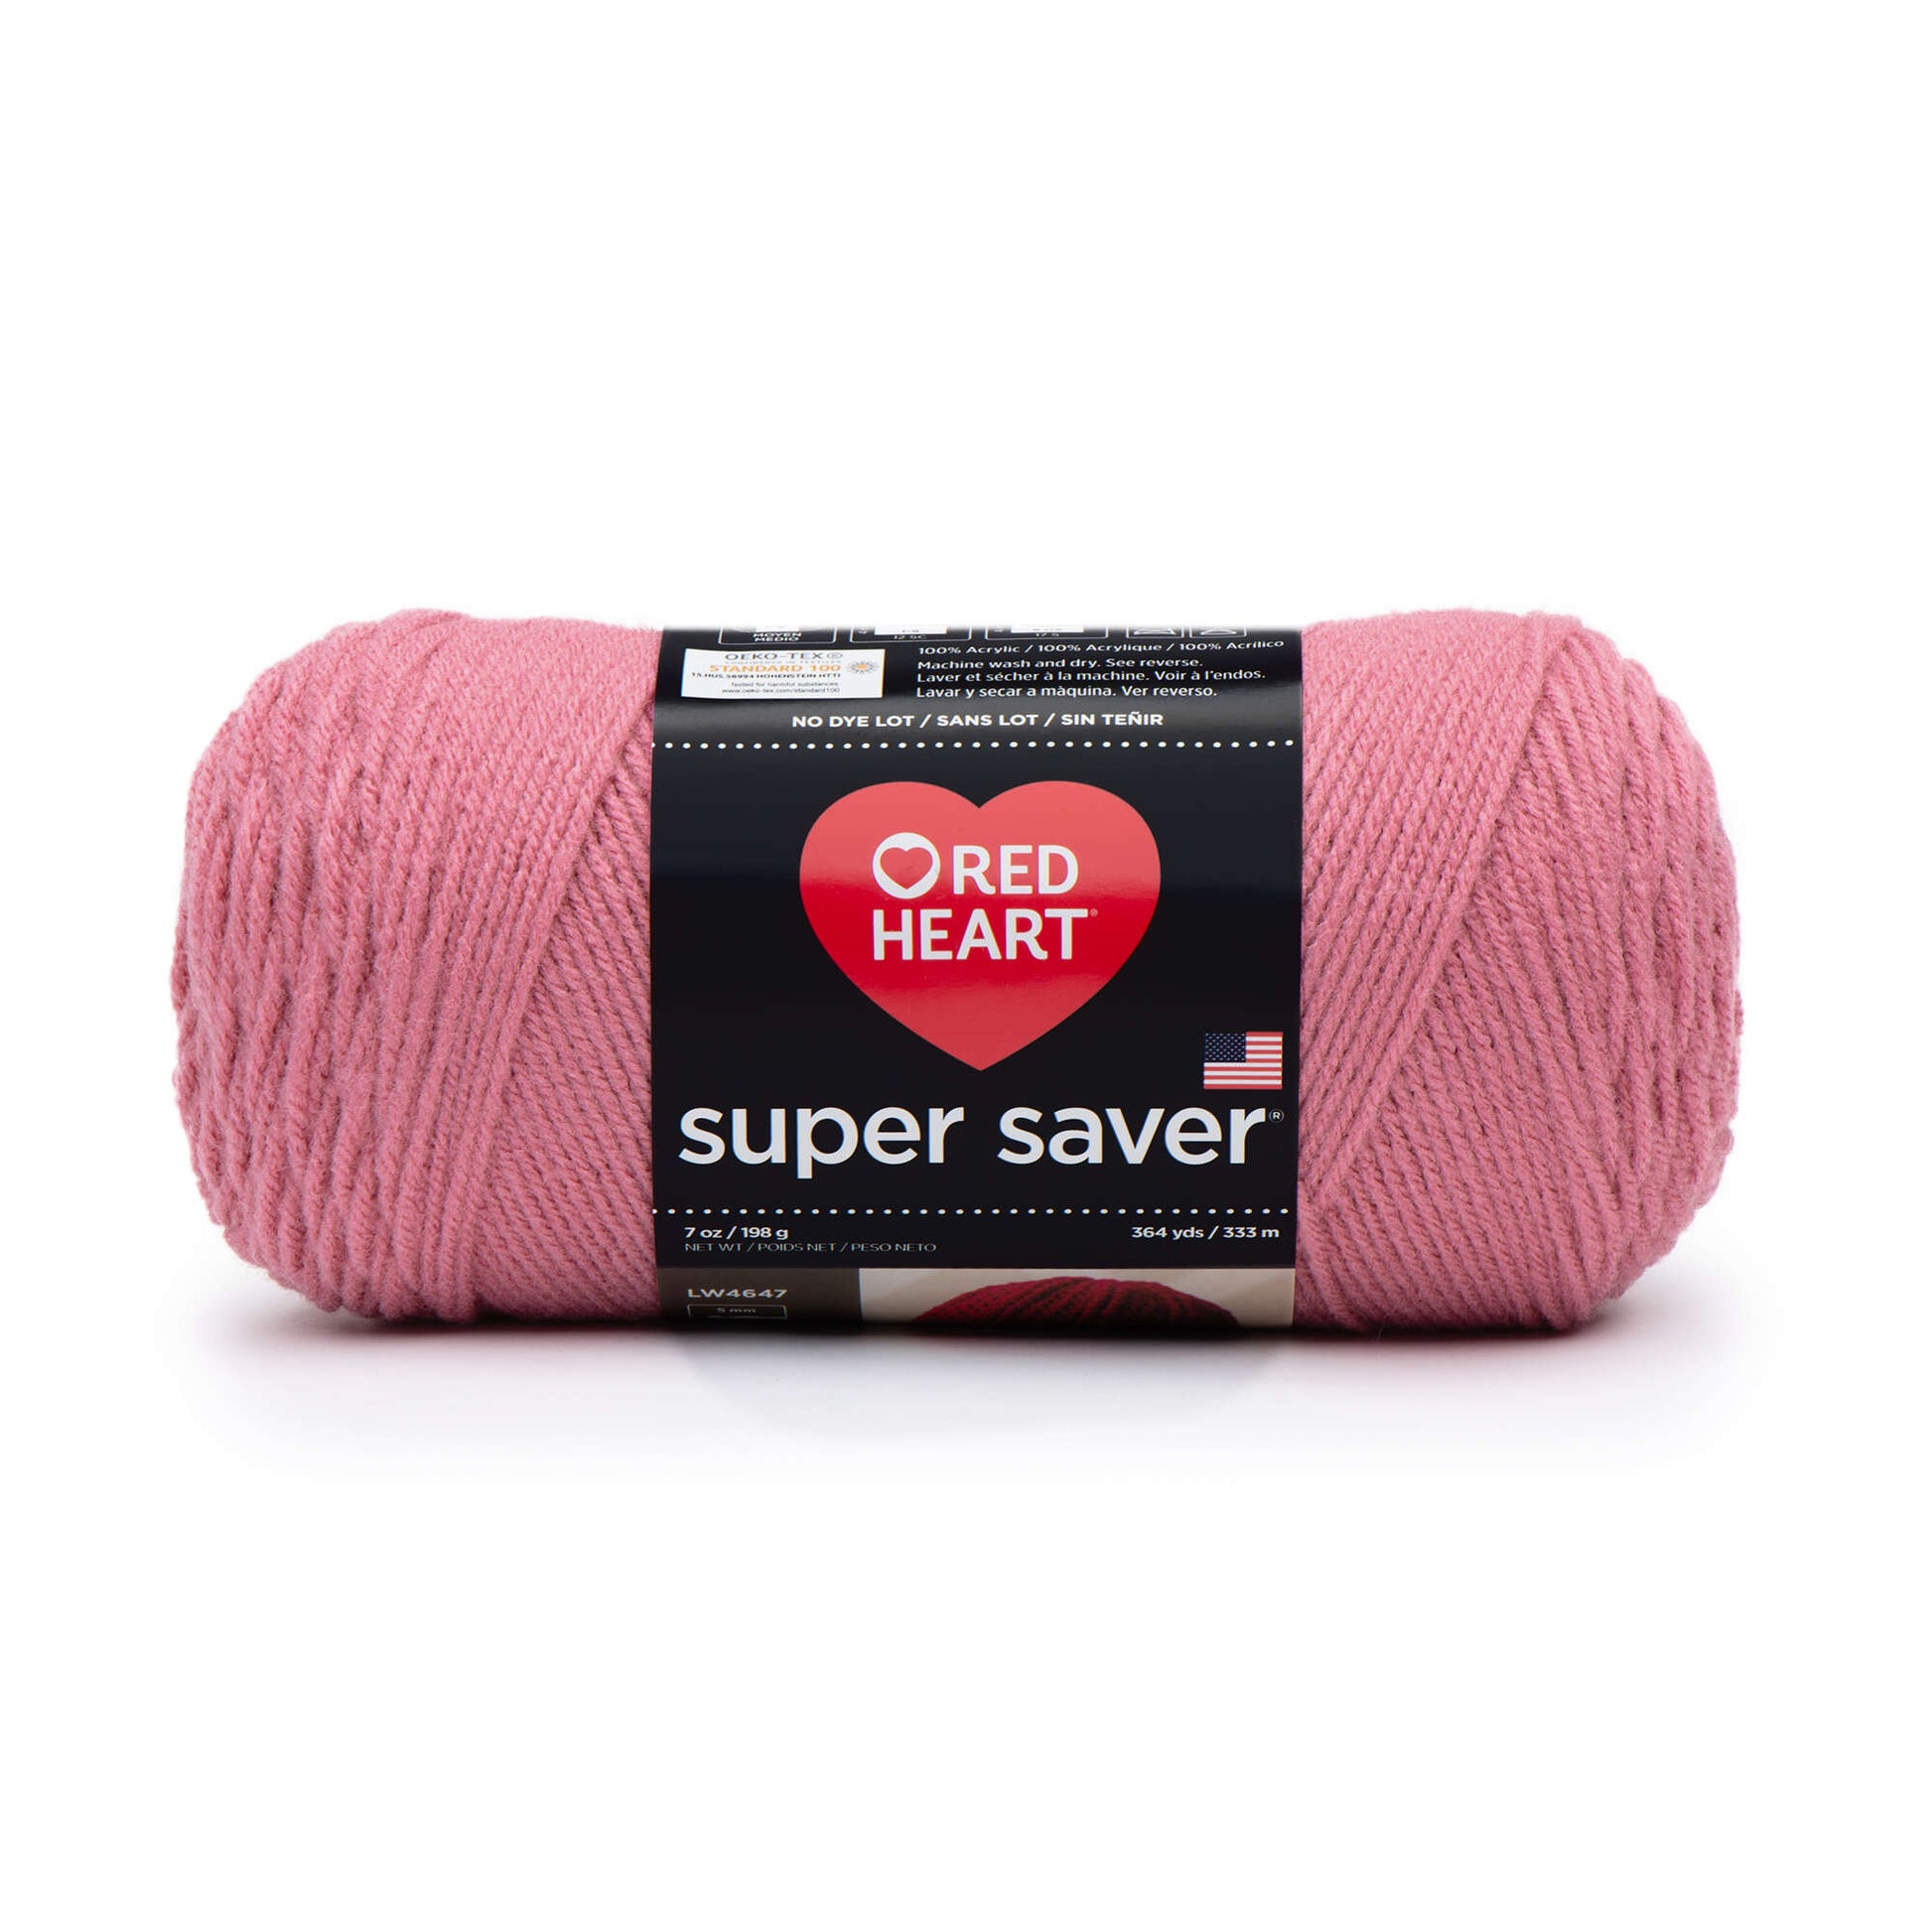 Red Heart Super Saver Yarn